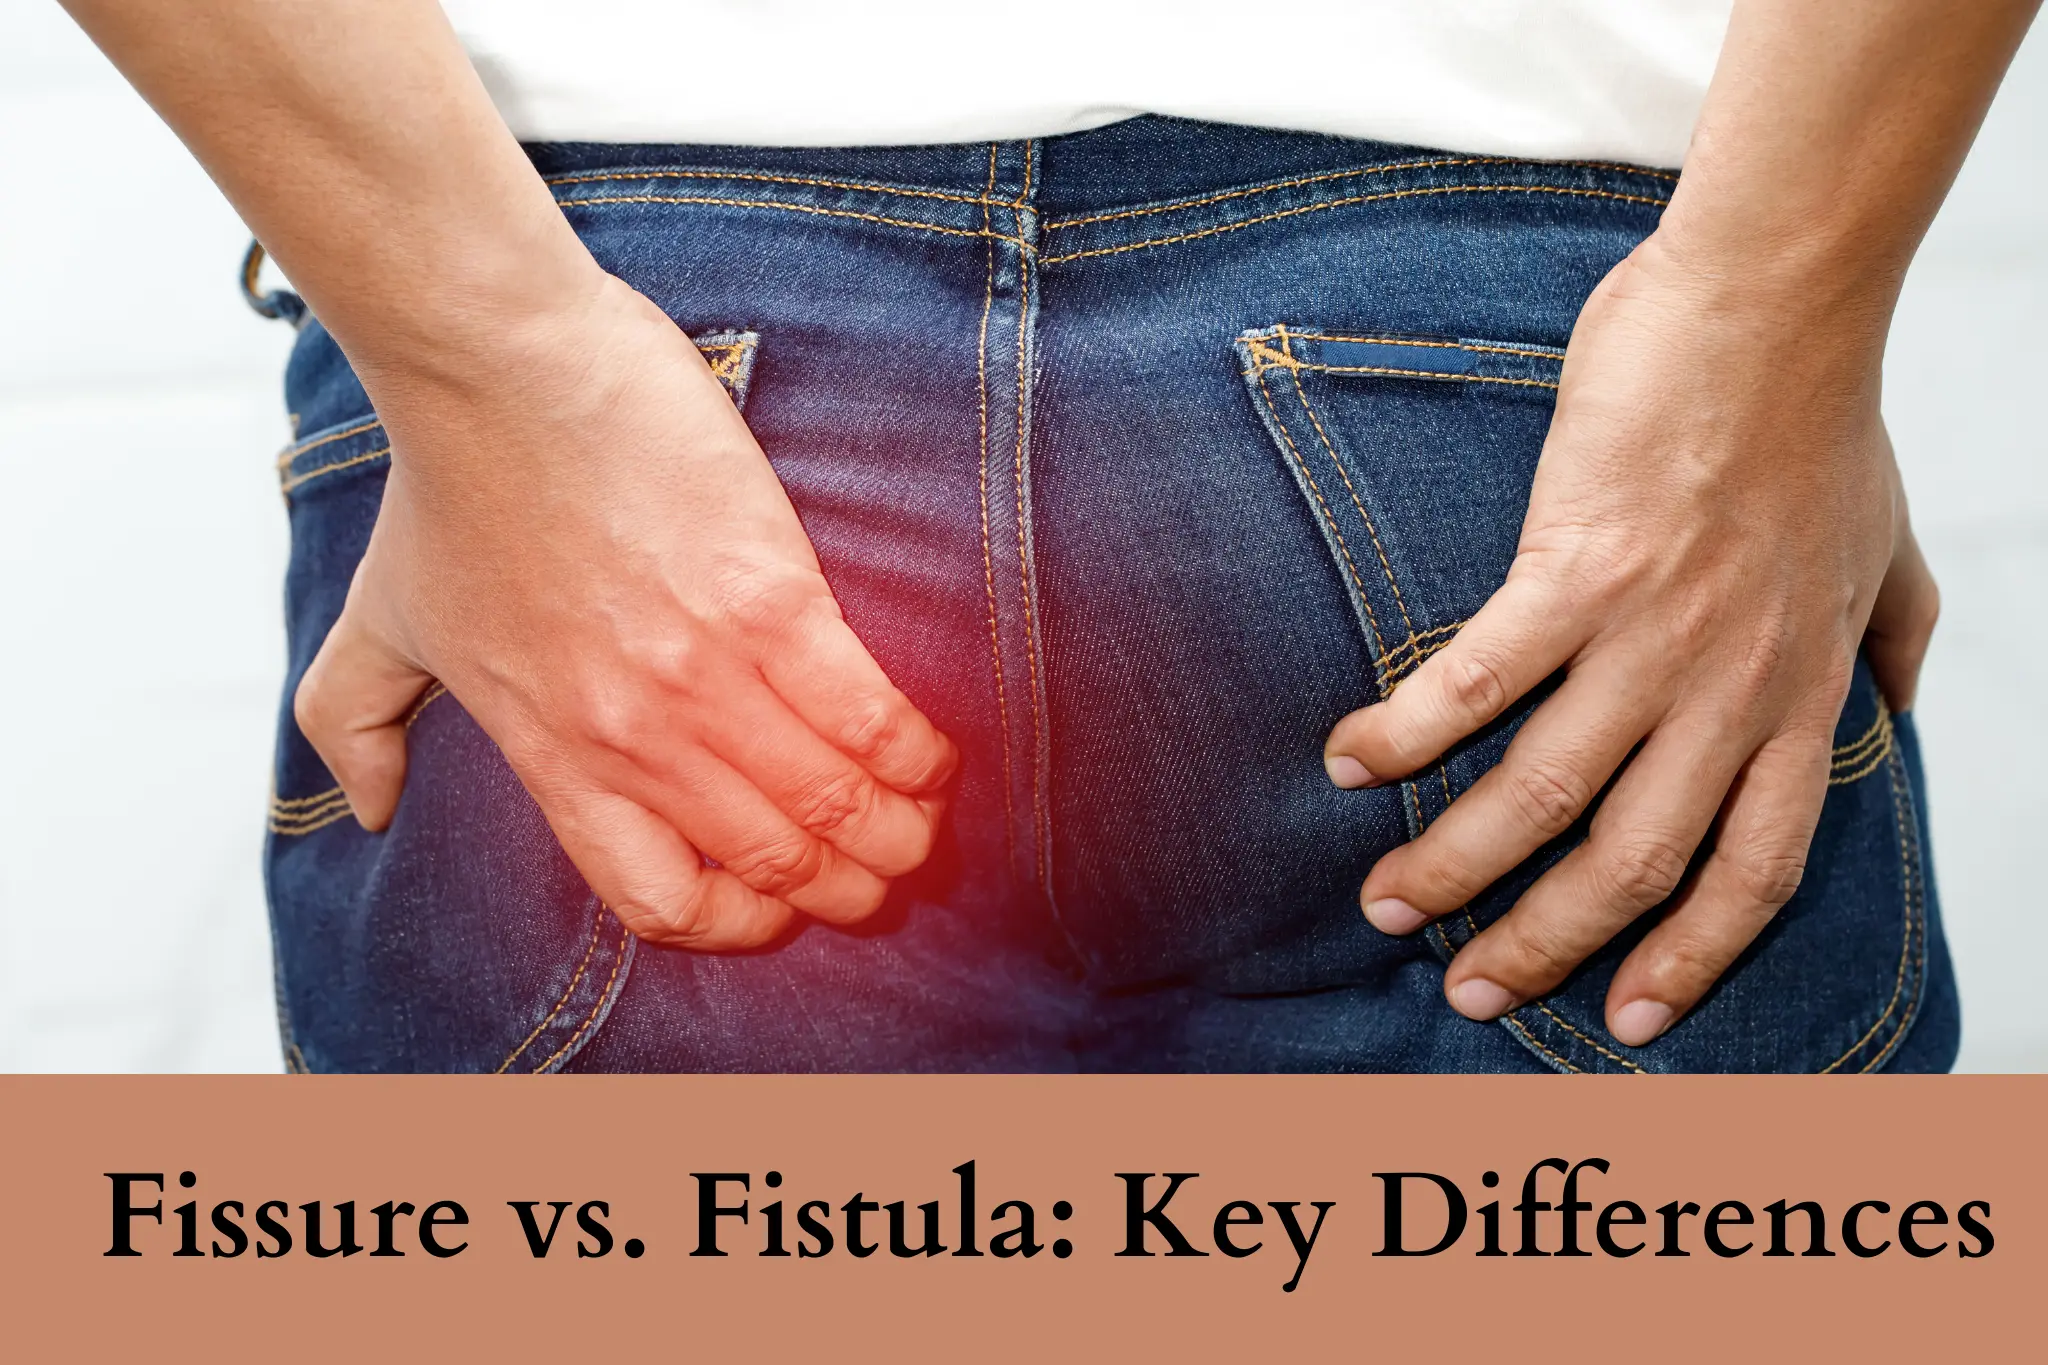 Fissure vs. Fistula